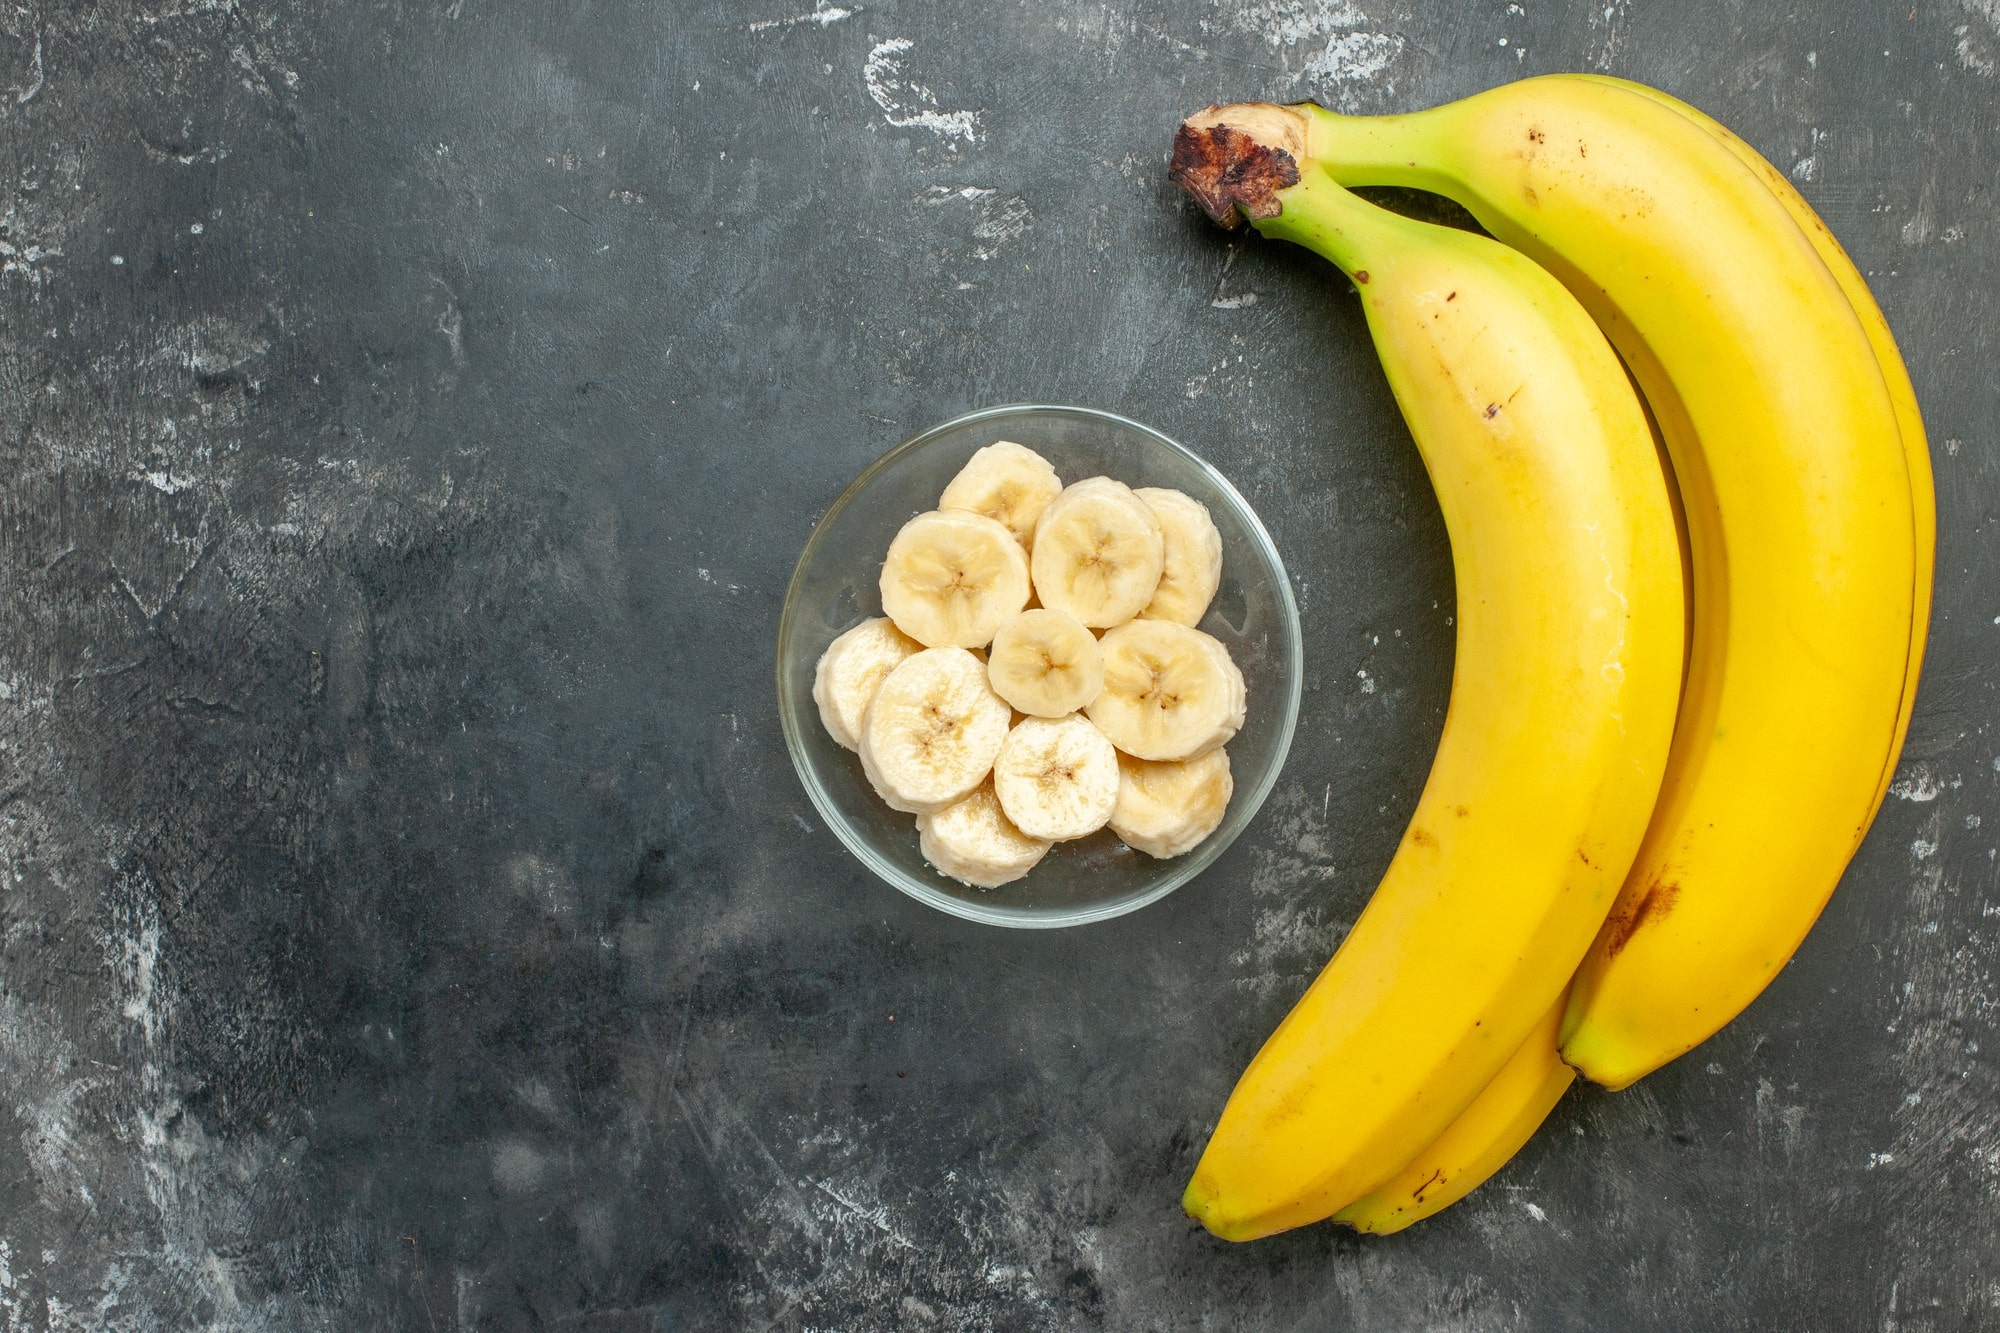 Benefits of Bananas for good health